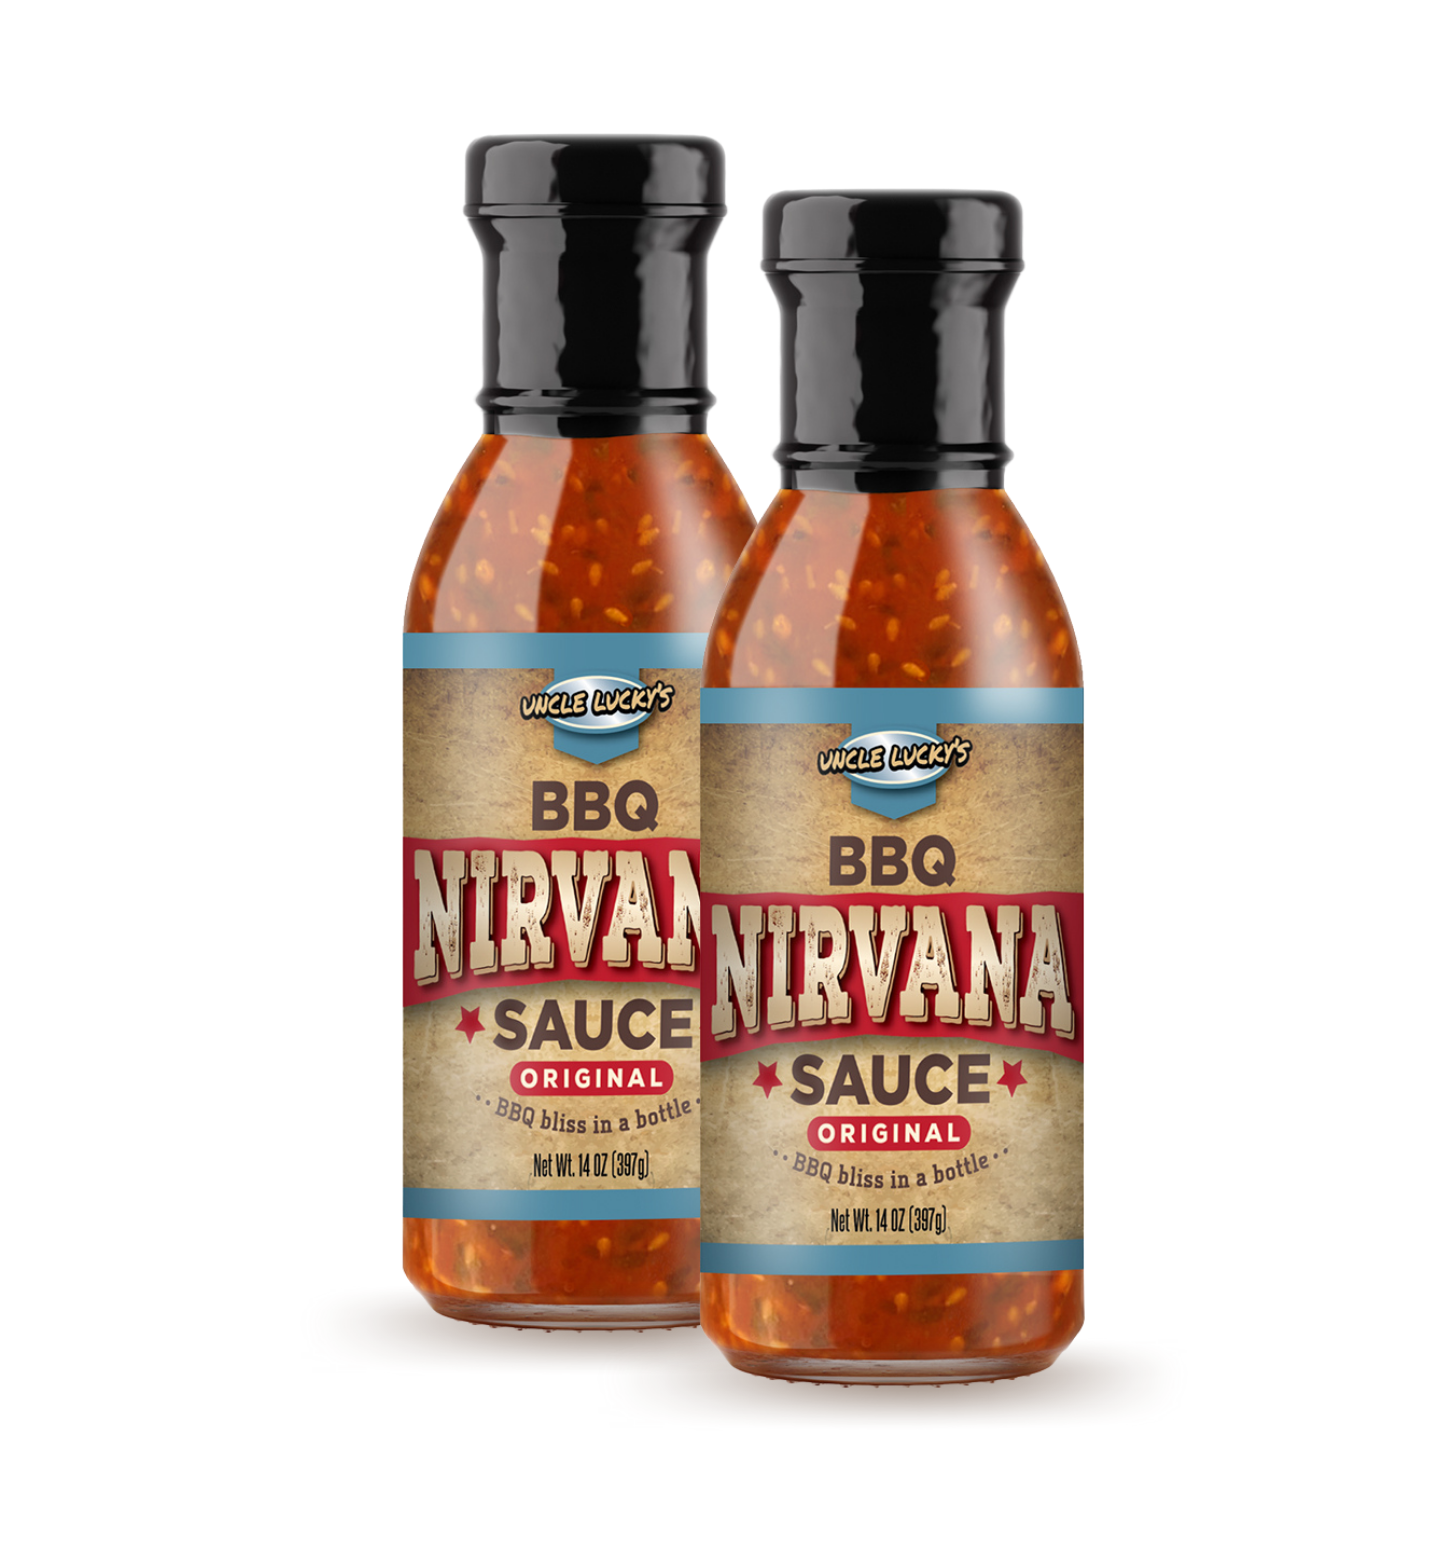 Nirvana Sauce